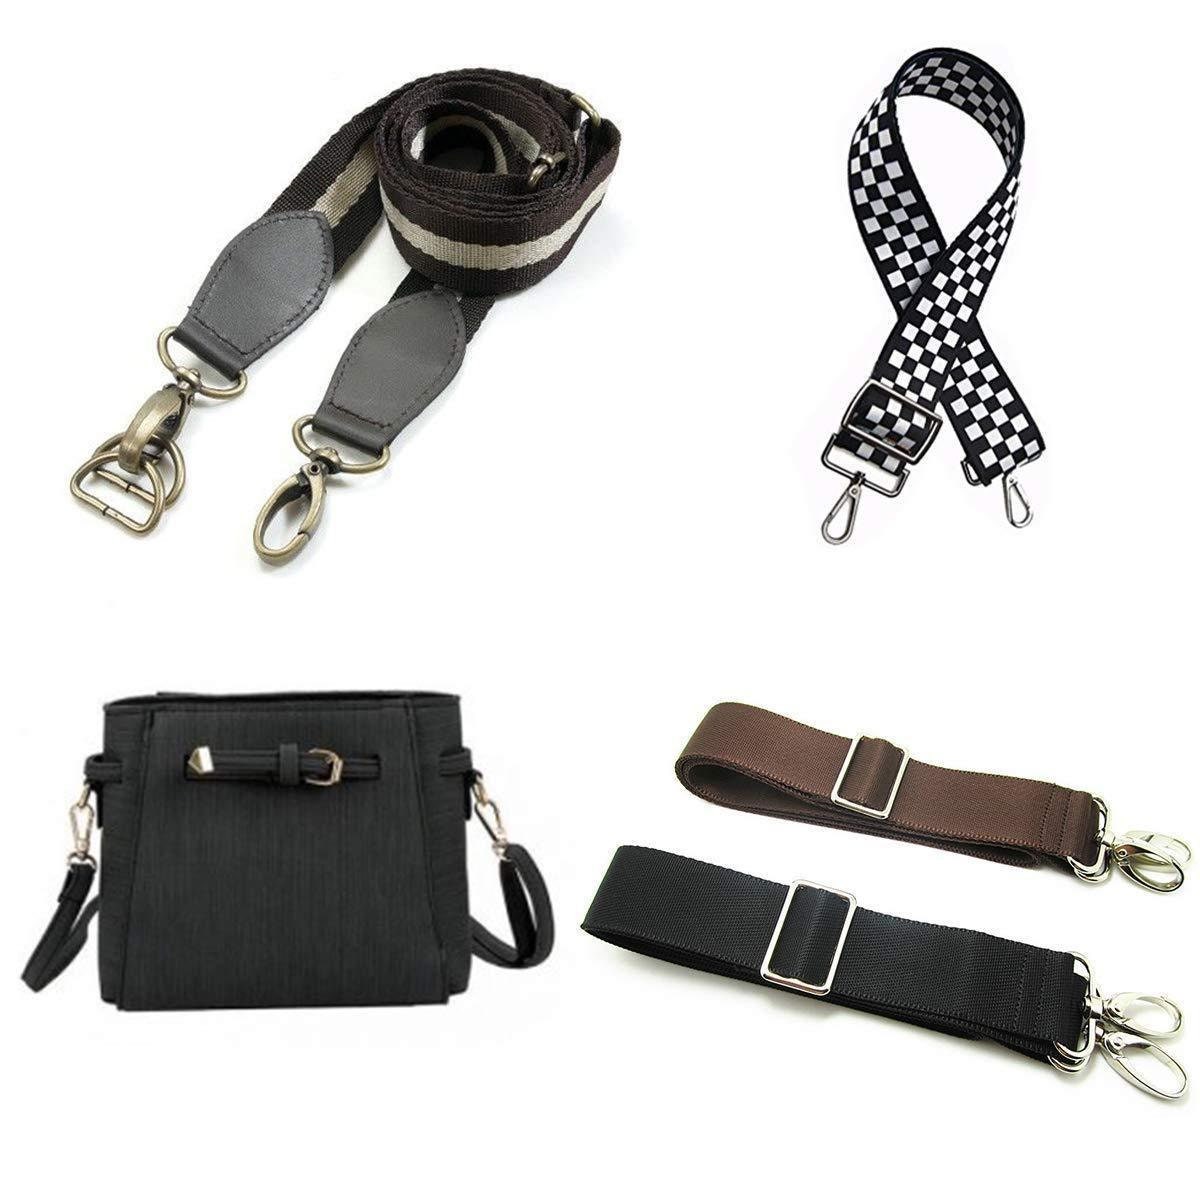 Adjustable Metal Buckle for Handbag Purse Chain Strap Bag Hooks Clips  Ornament